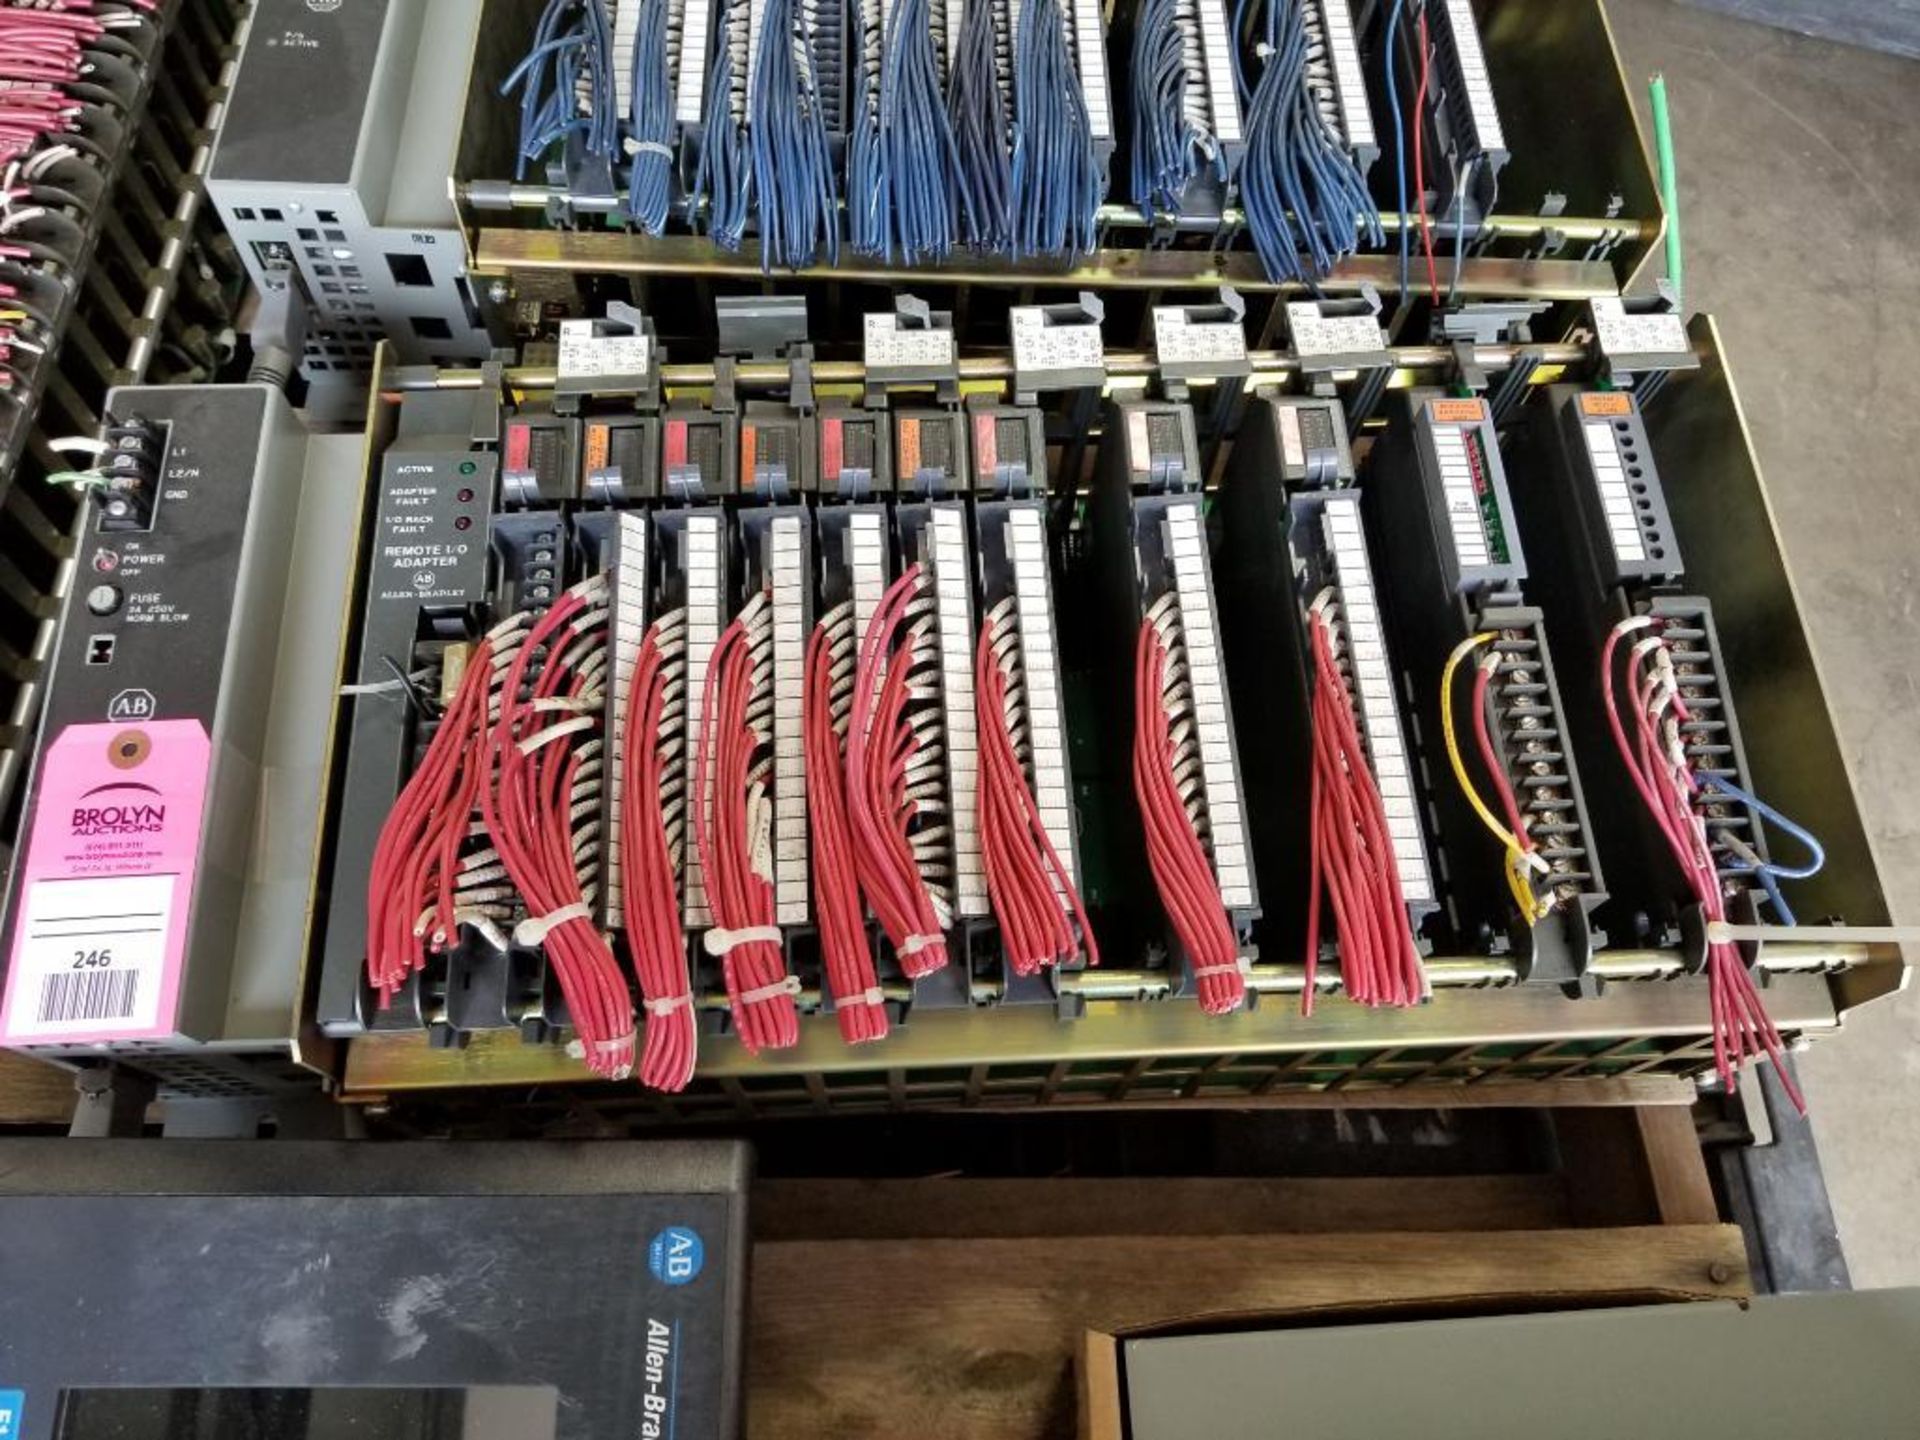 Allen Bradley PLC rack as pictured.